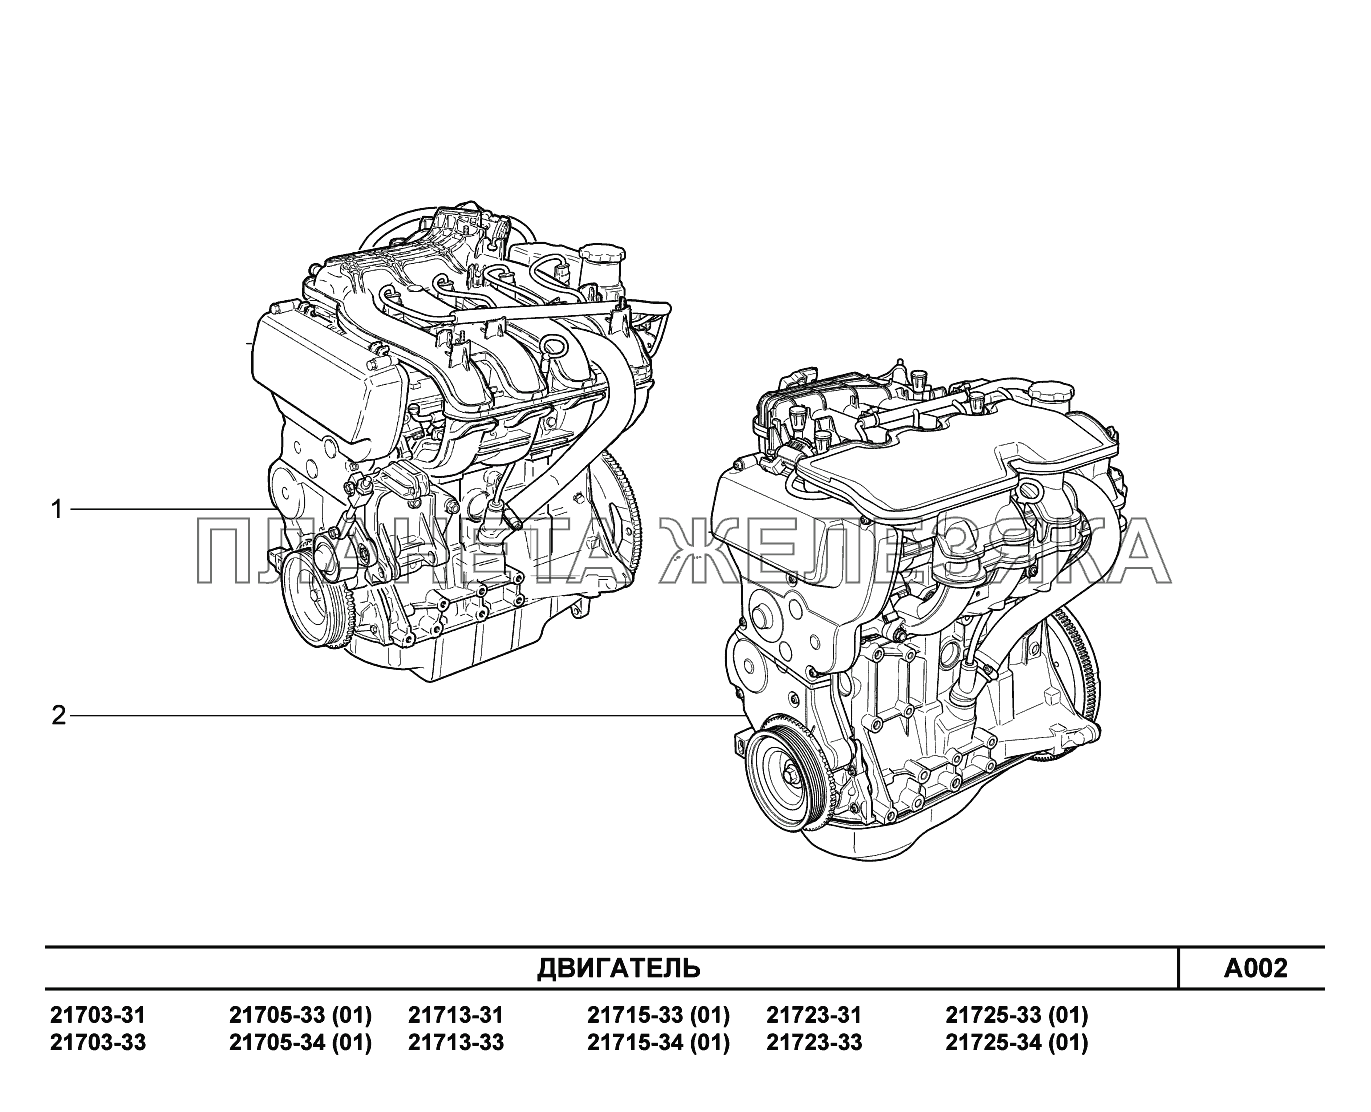 A002. Двигатель ВАЗ-2170 